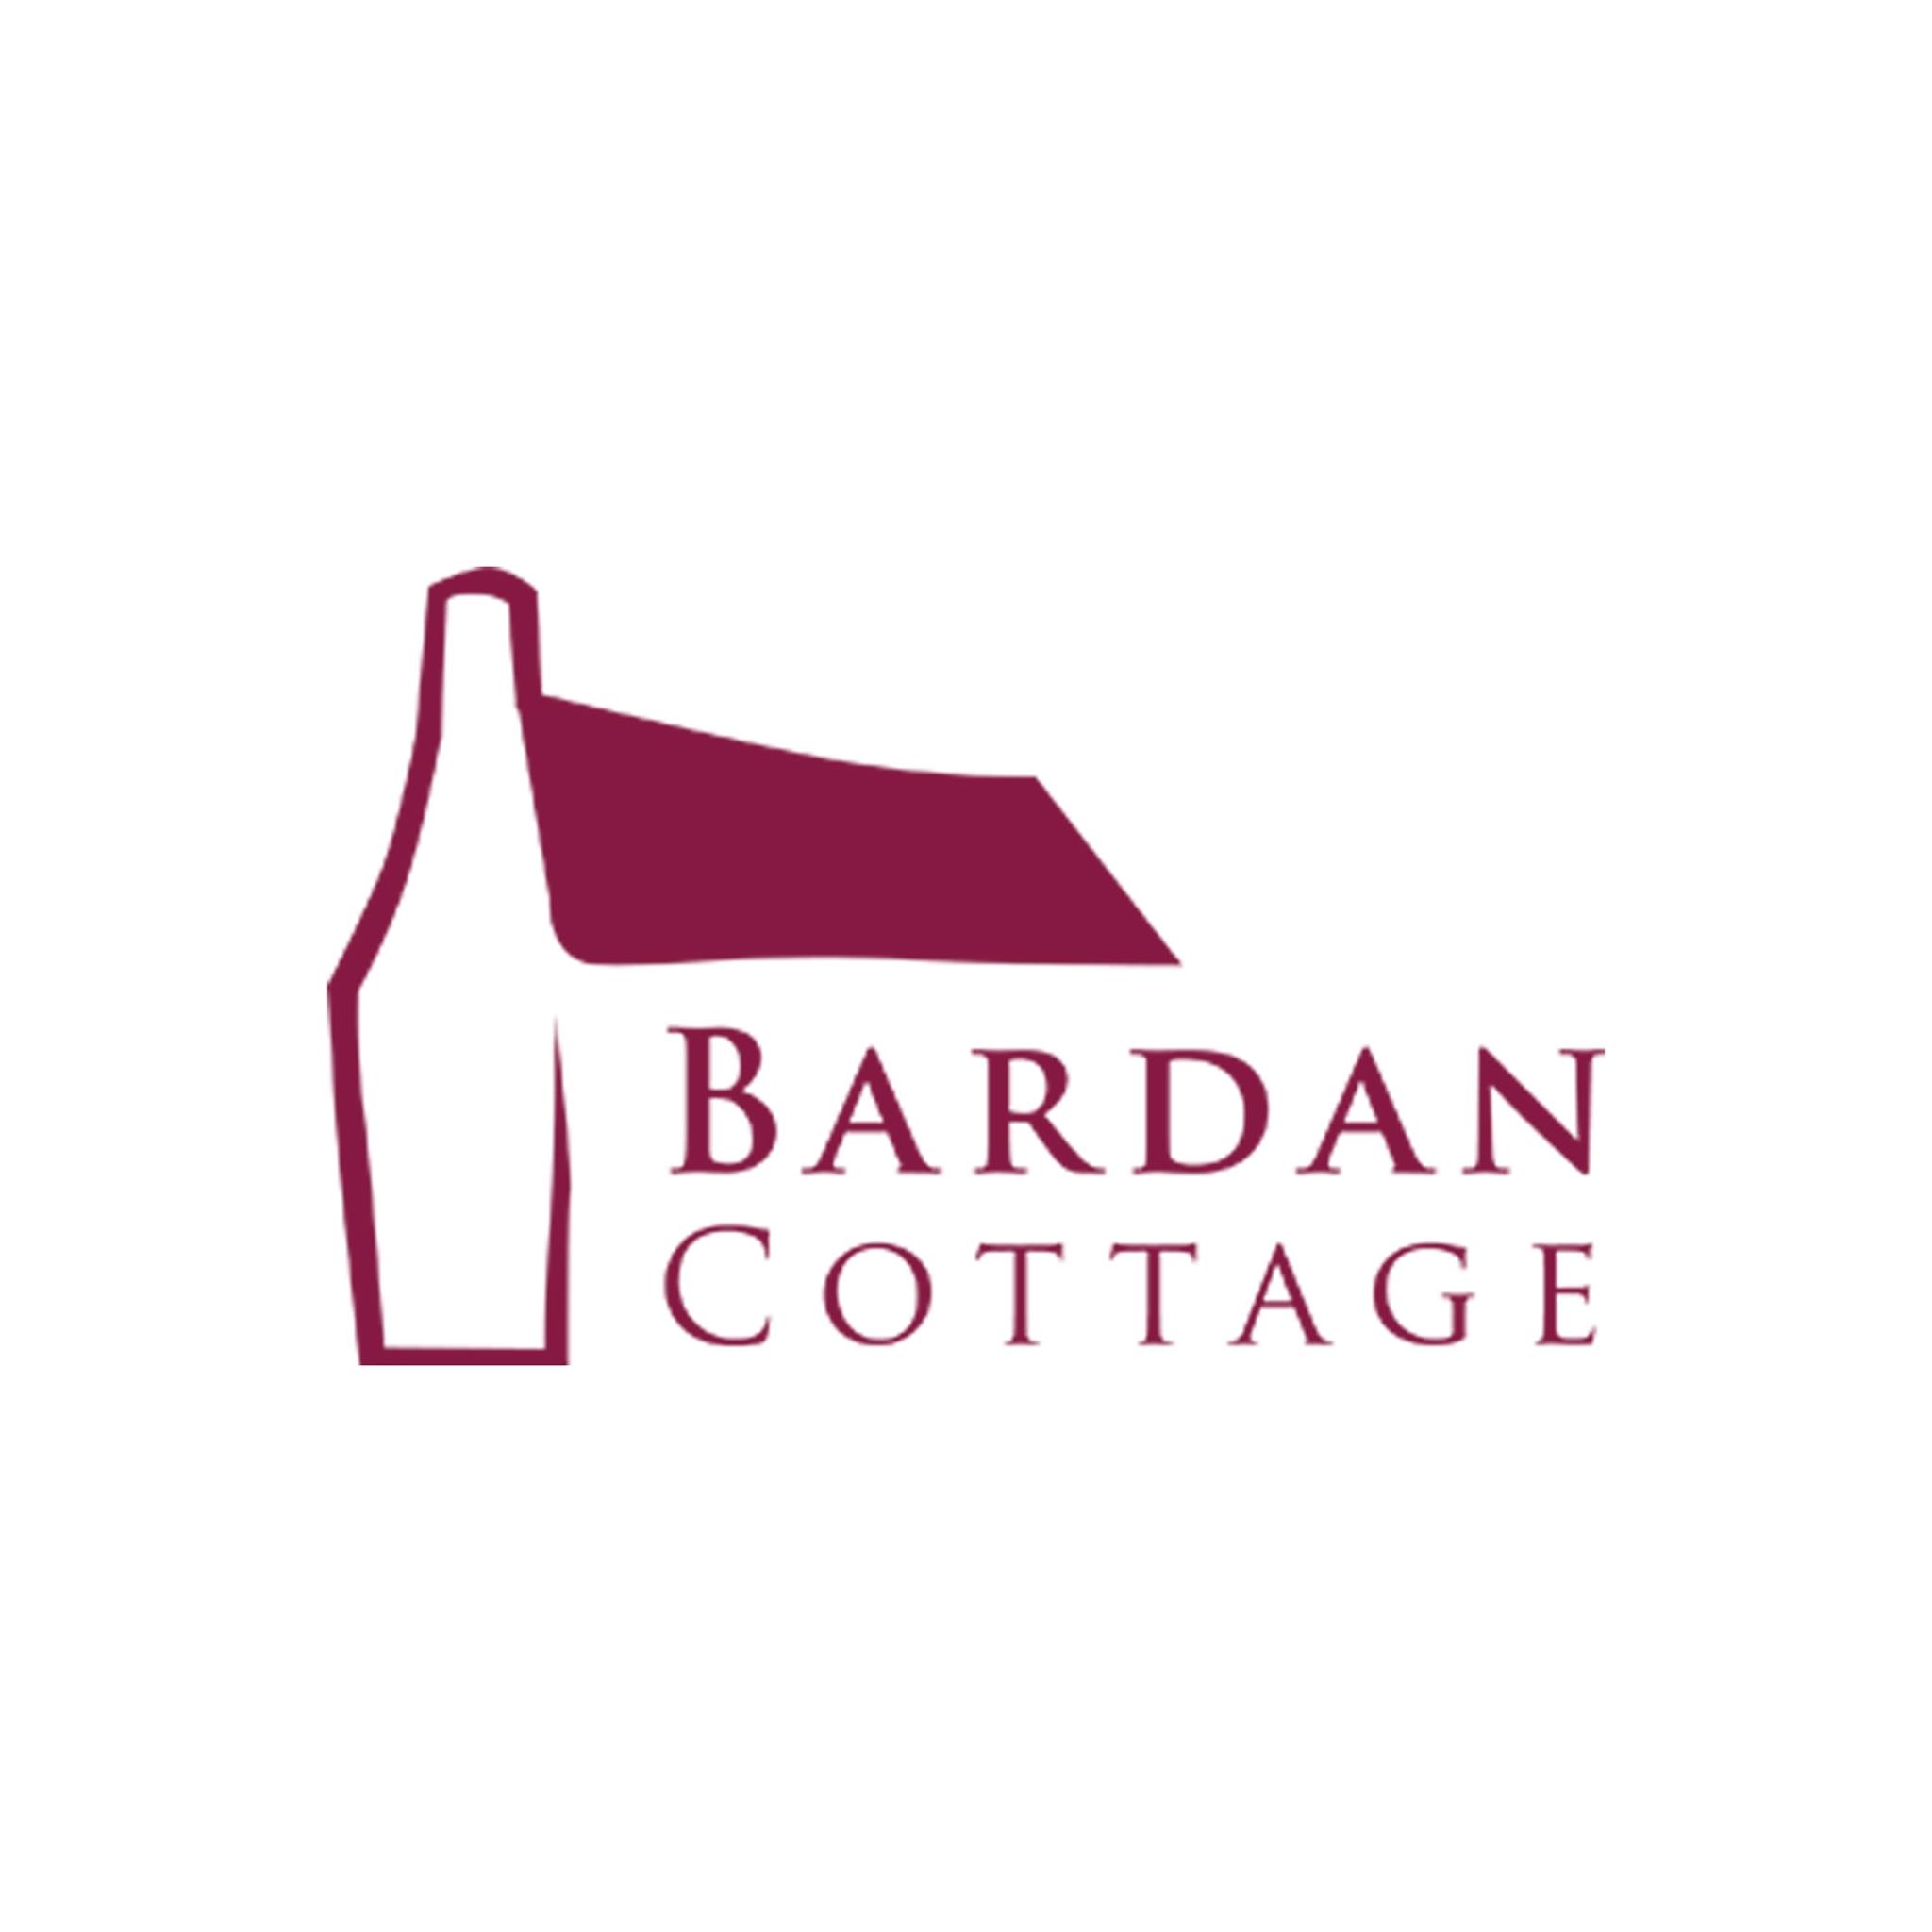 Bardan Cottage Elderly Day Care Centre